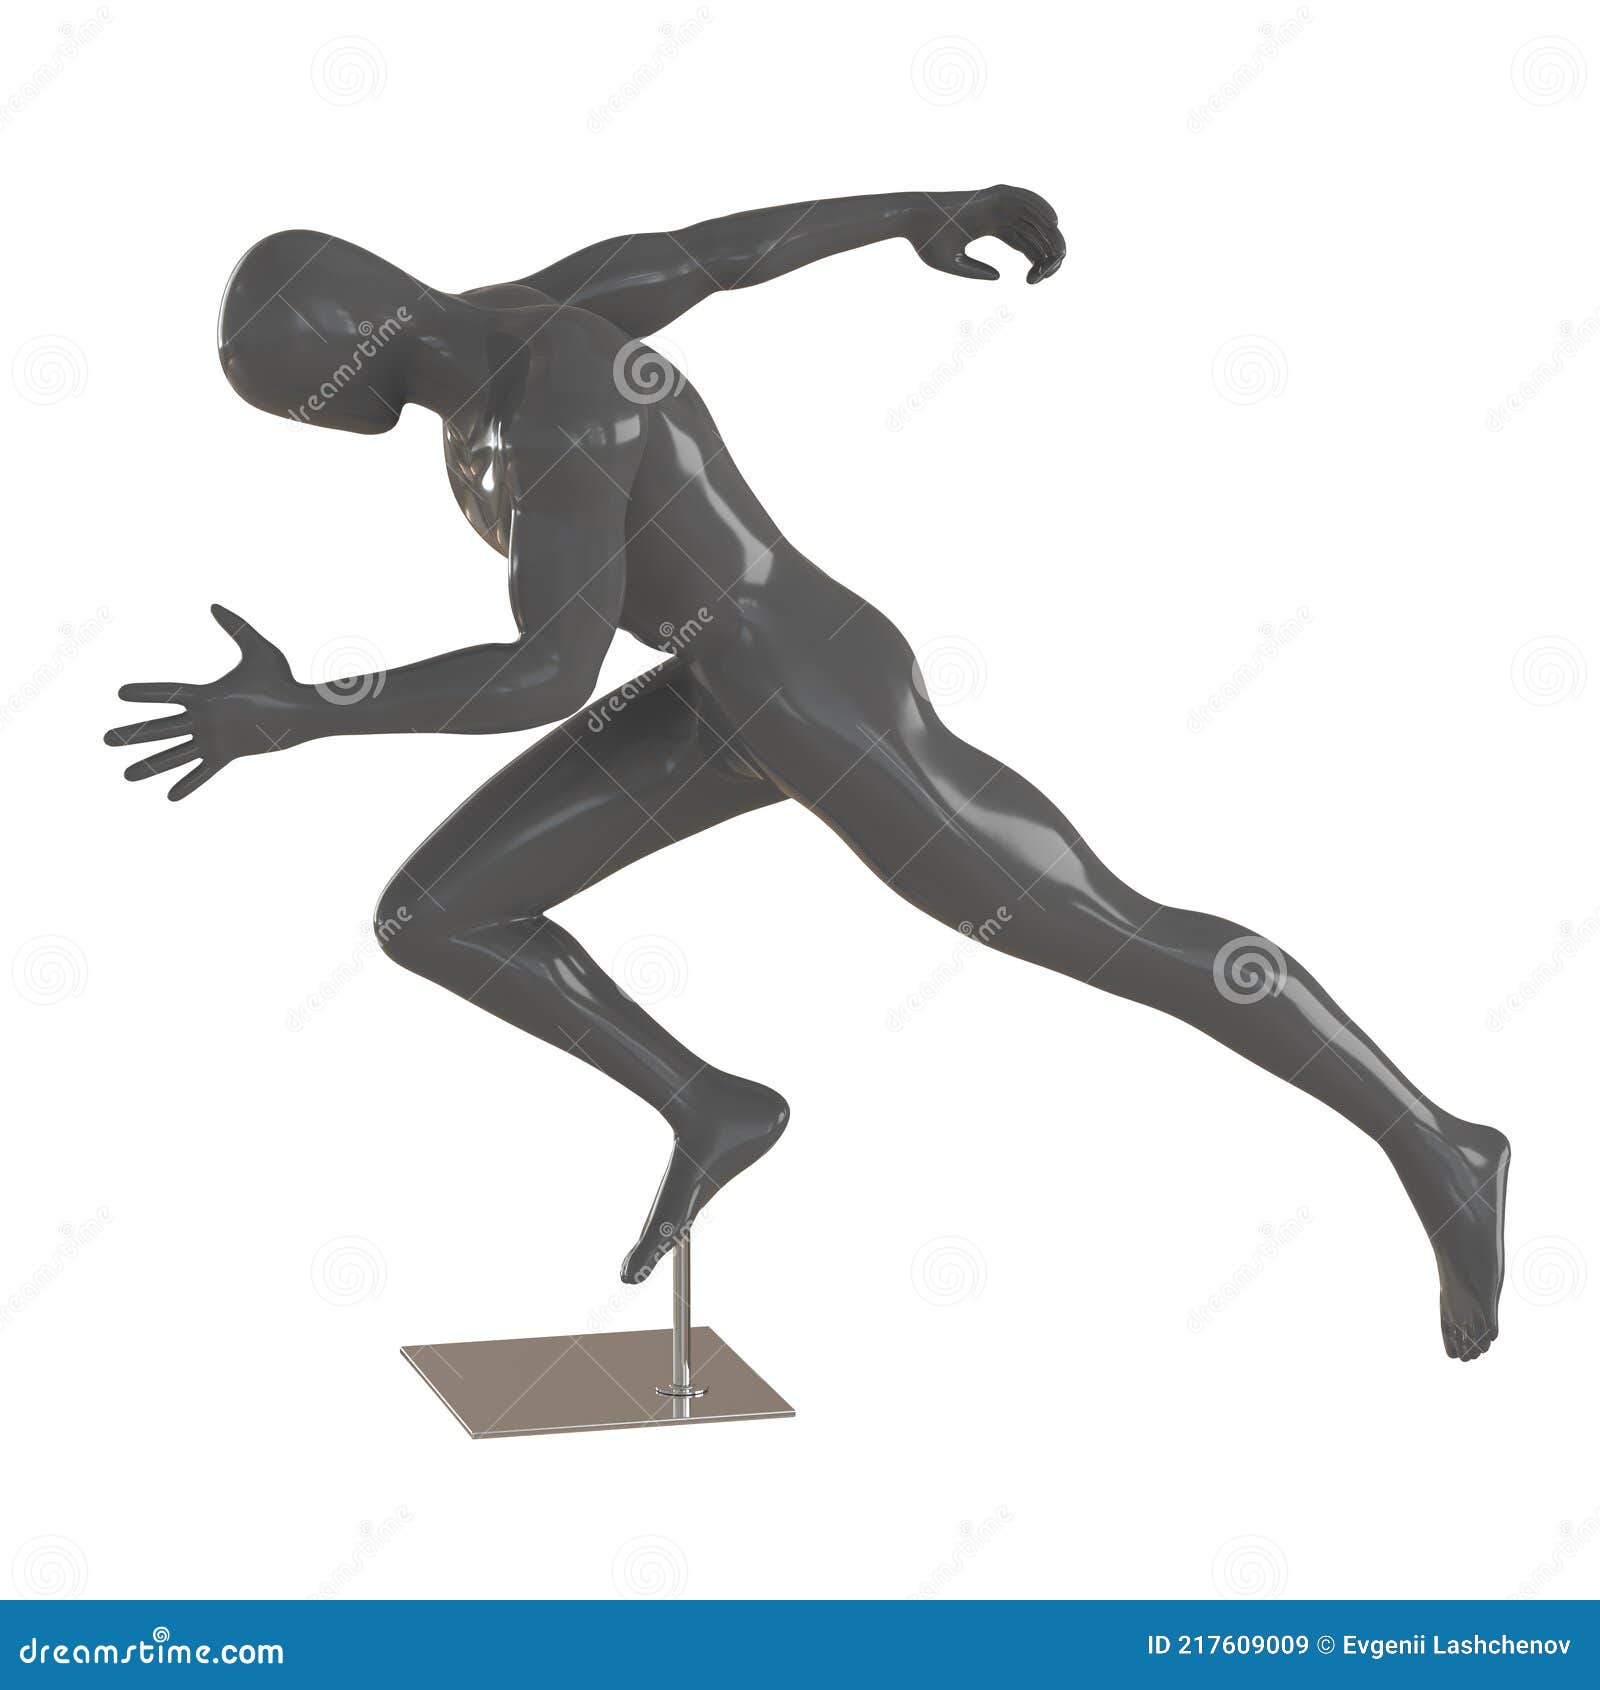 sprinting pose man mannequin running male| Alibaba.com